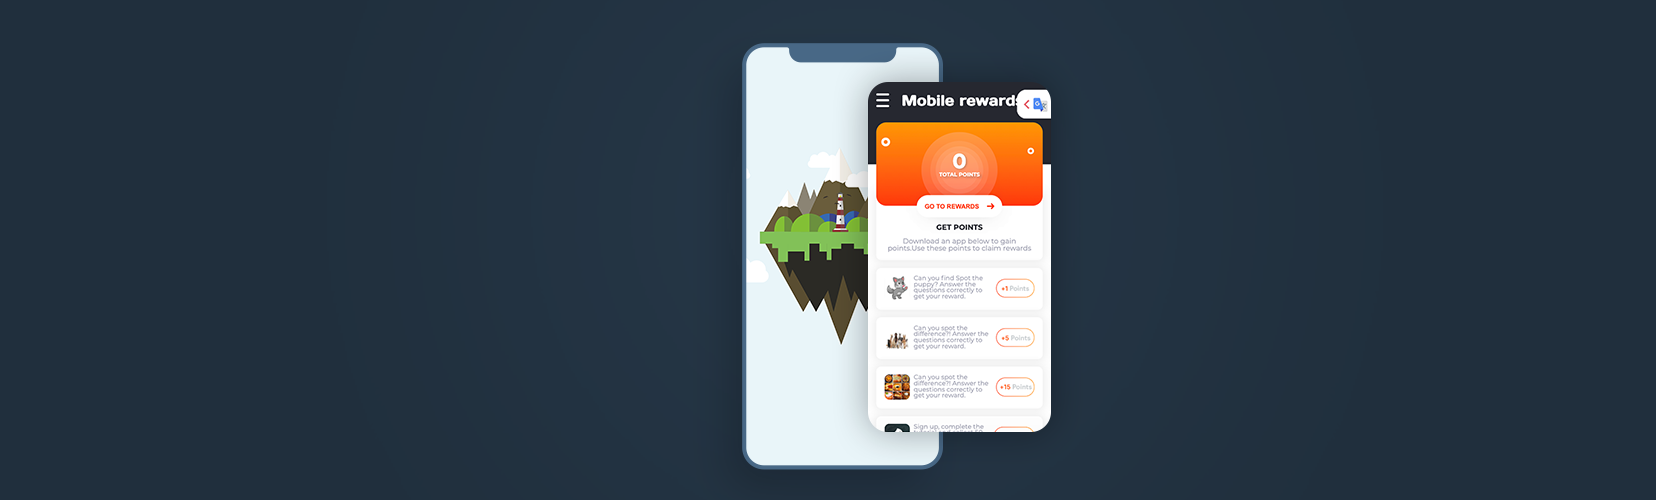 mobile-rewards